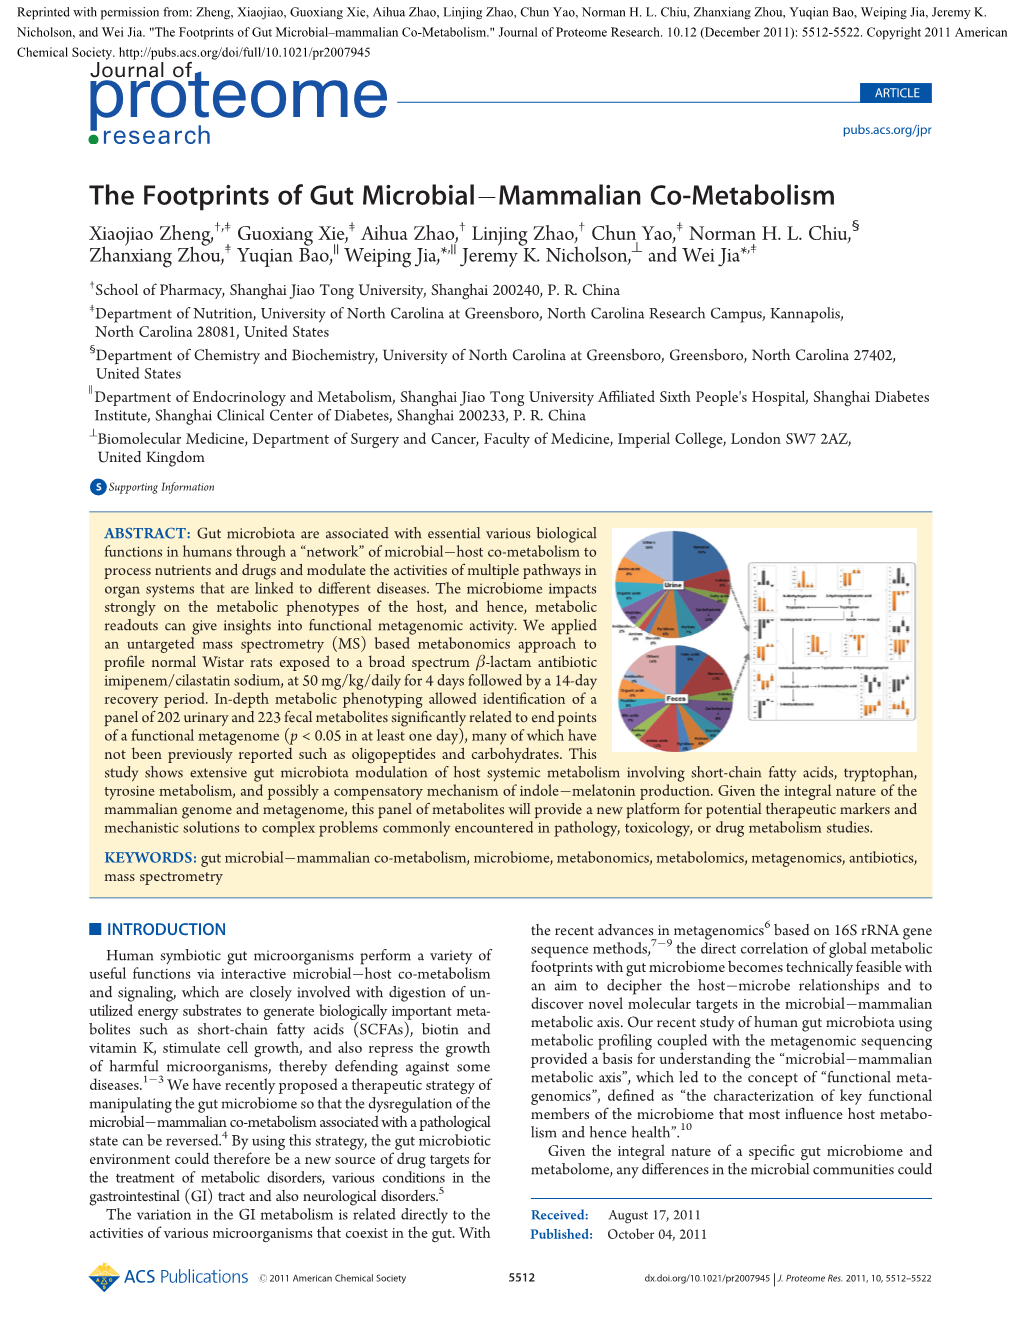 The Footprints of Gut Microbial–Mammalian Co-Metabolism